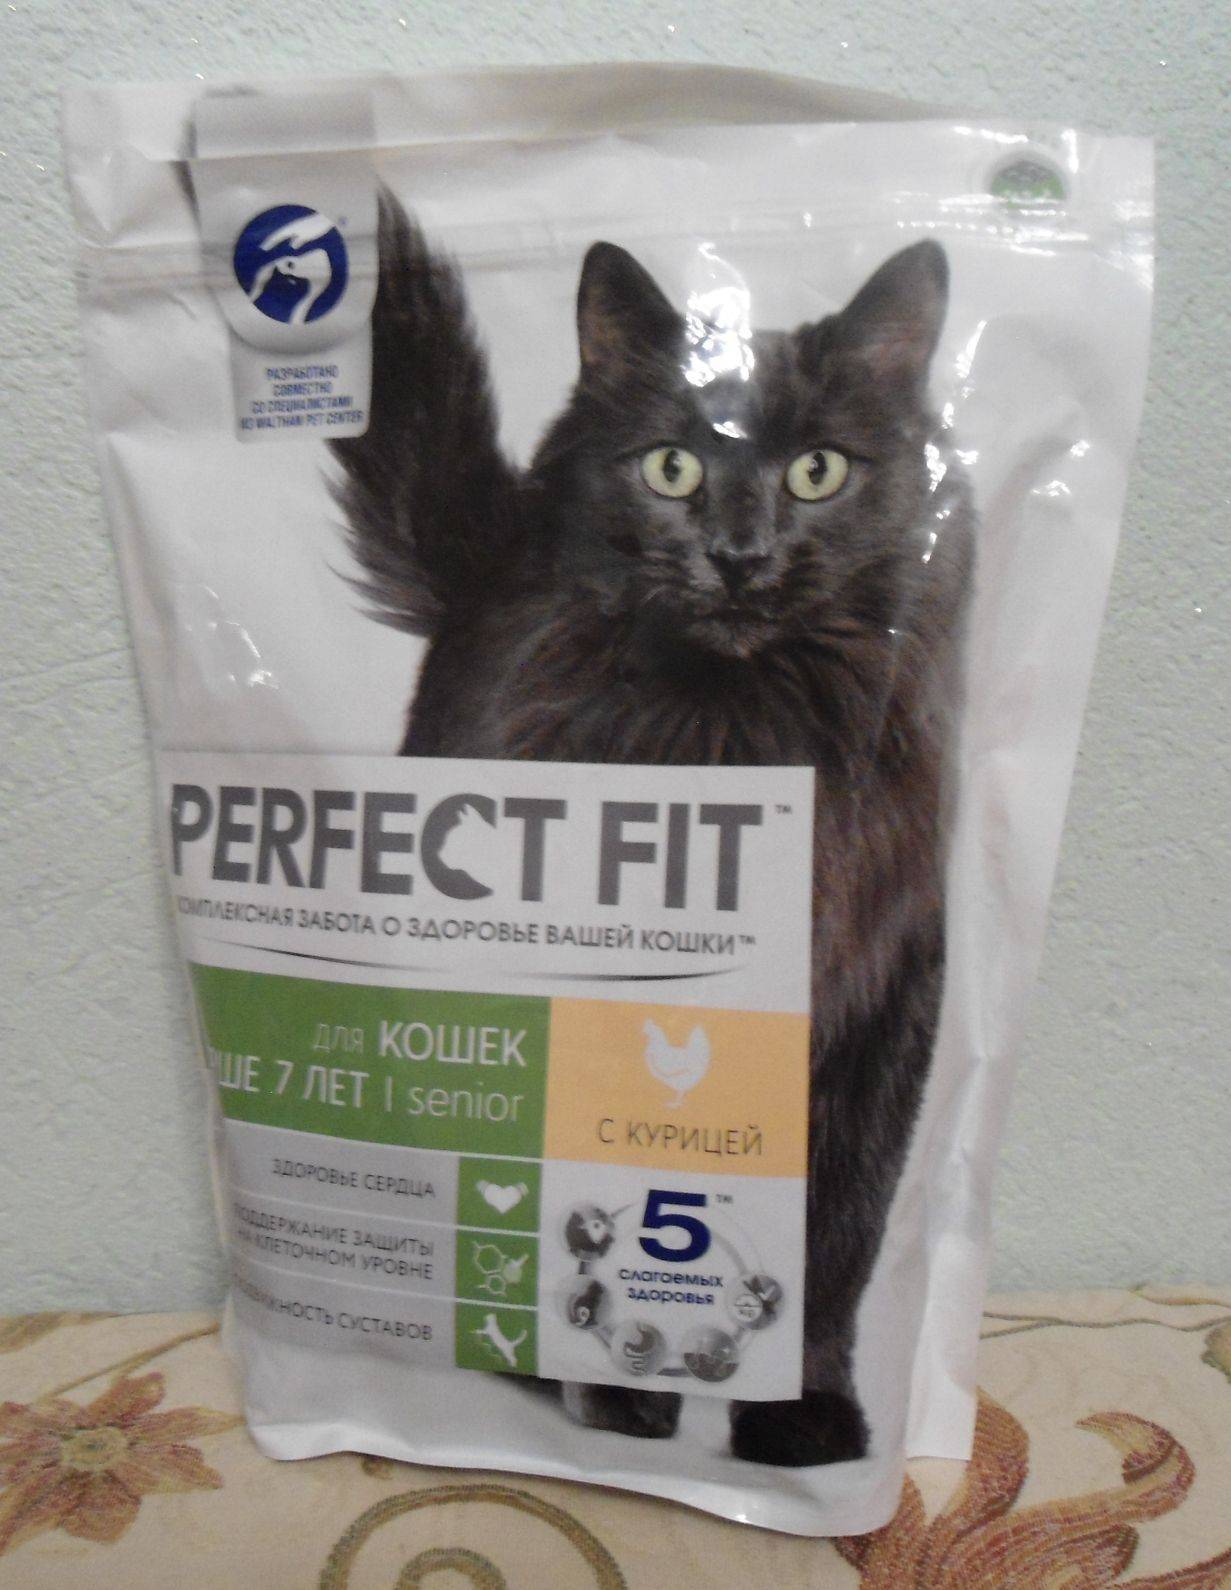 Perfect fit cat active - рейтинг, обзор корма, сравнение и анализ perfect fit cat active, состав и описание корма, плюсы и минусы perfect fit cat active, отзывы о корме, характеристика и дозировка